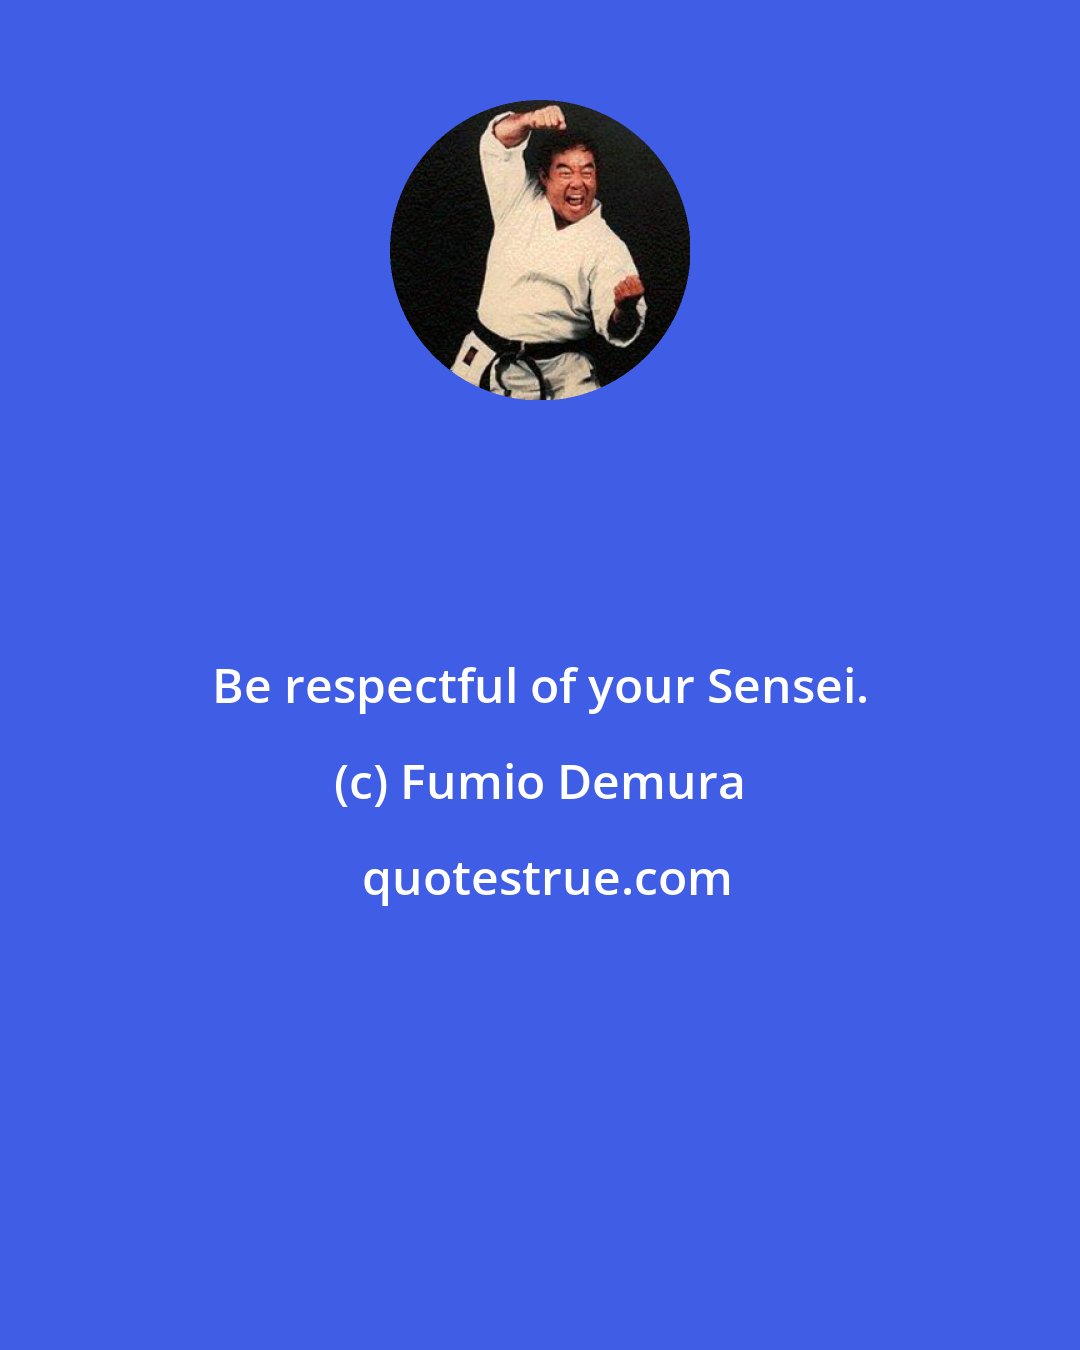 Fumio Demura: Be respectful of your Sensei.